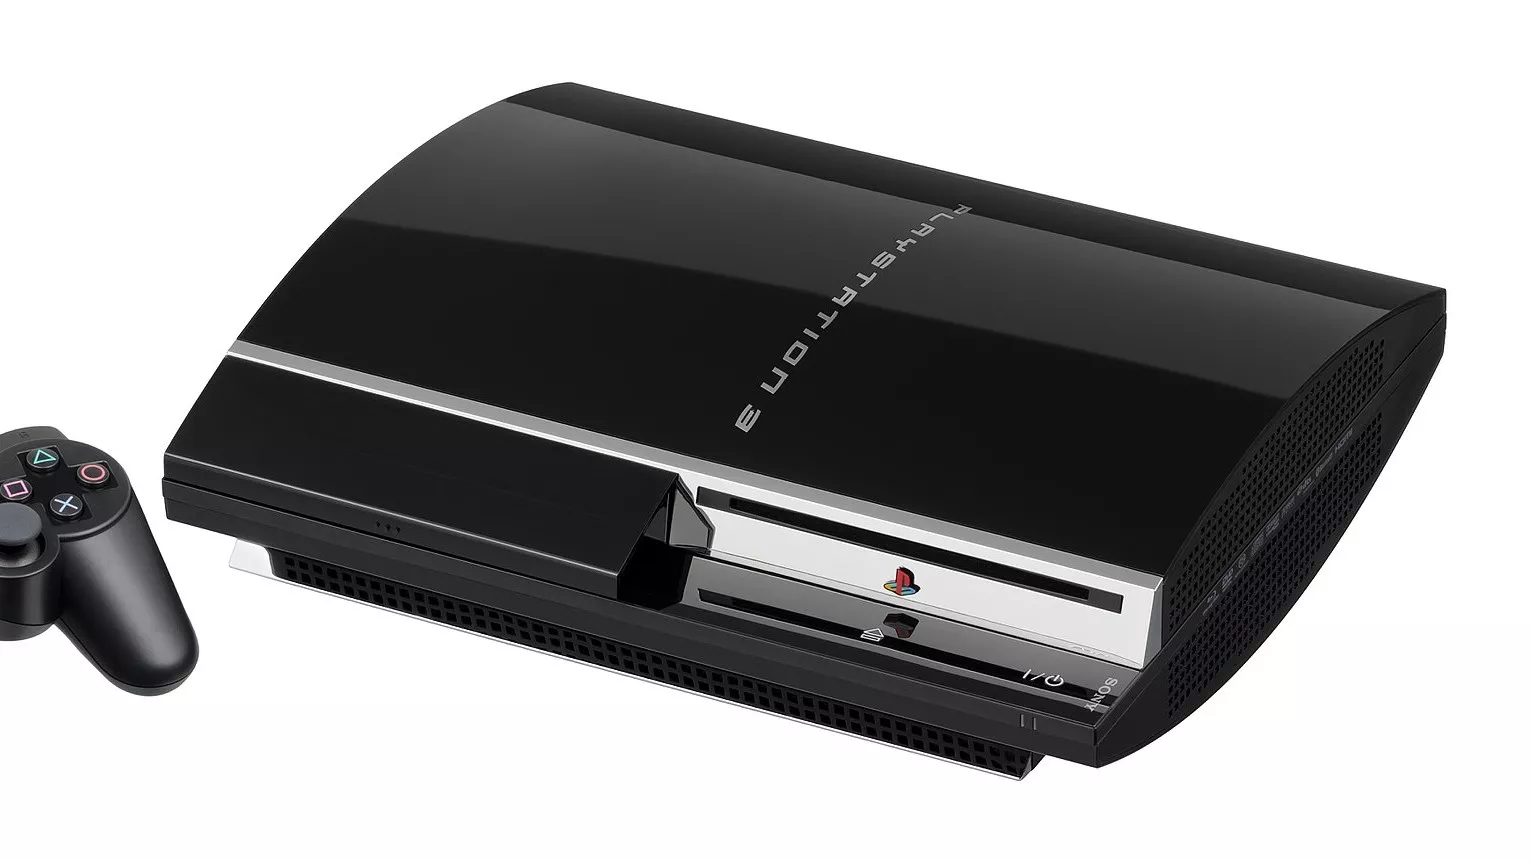 Die PlayStation 3 wird 15 Jahre alt Heropic